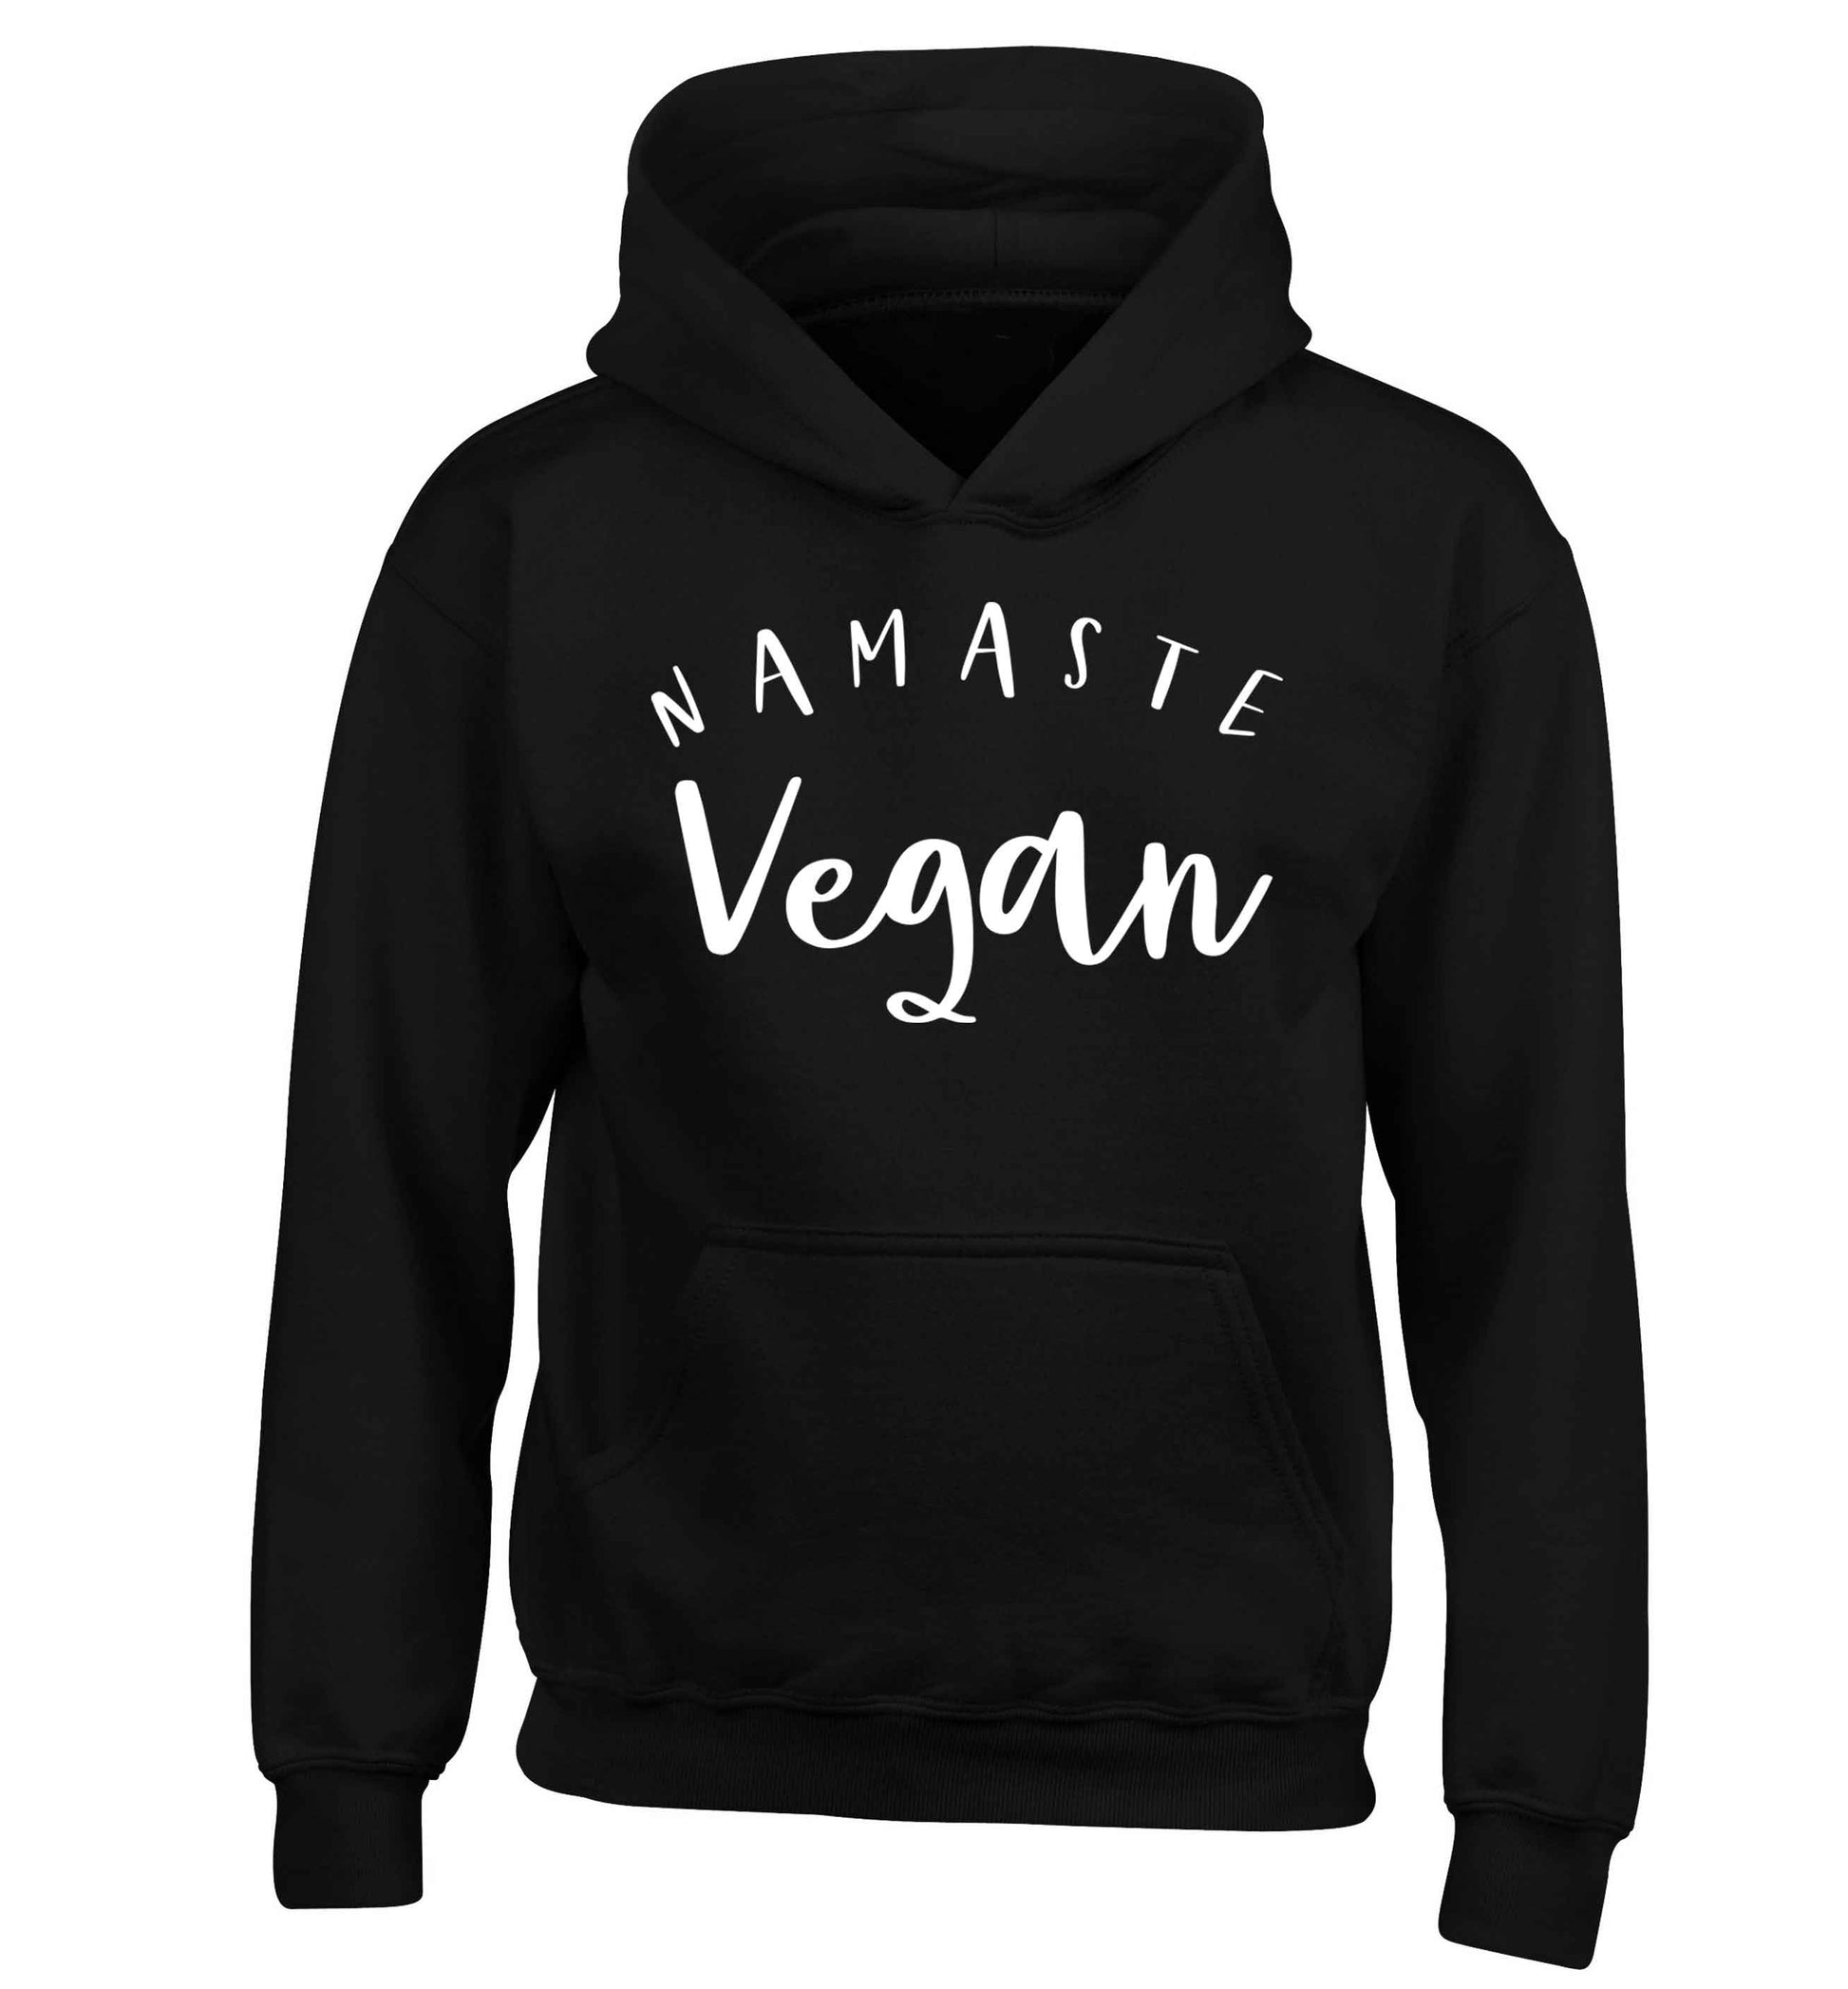 Namaste vegan children's black hoodie 12-13 Years